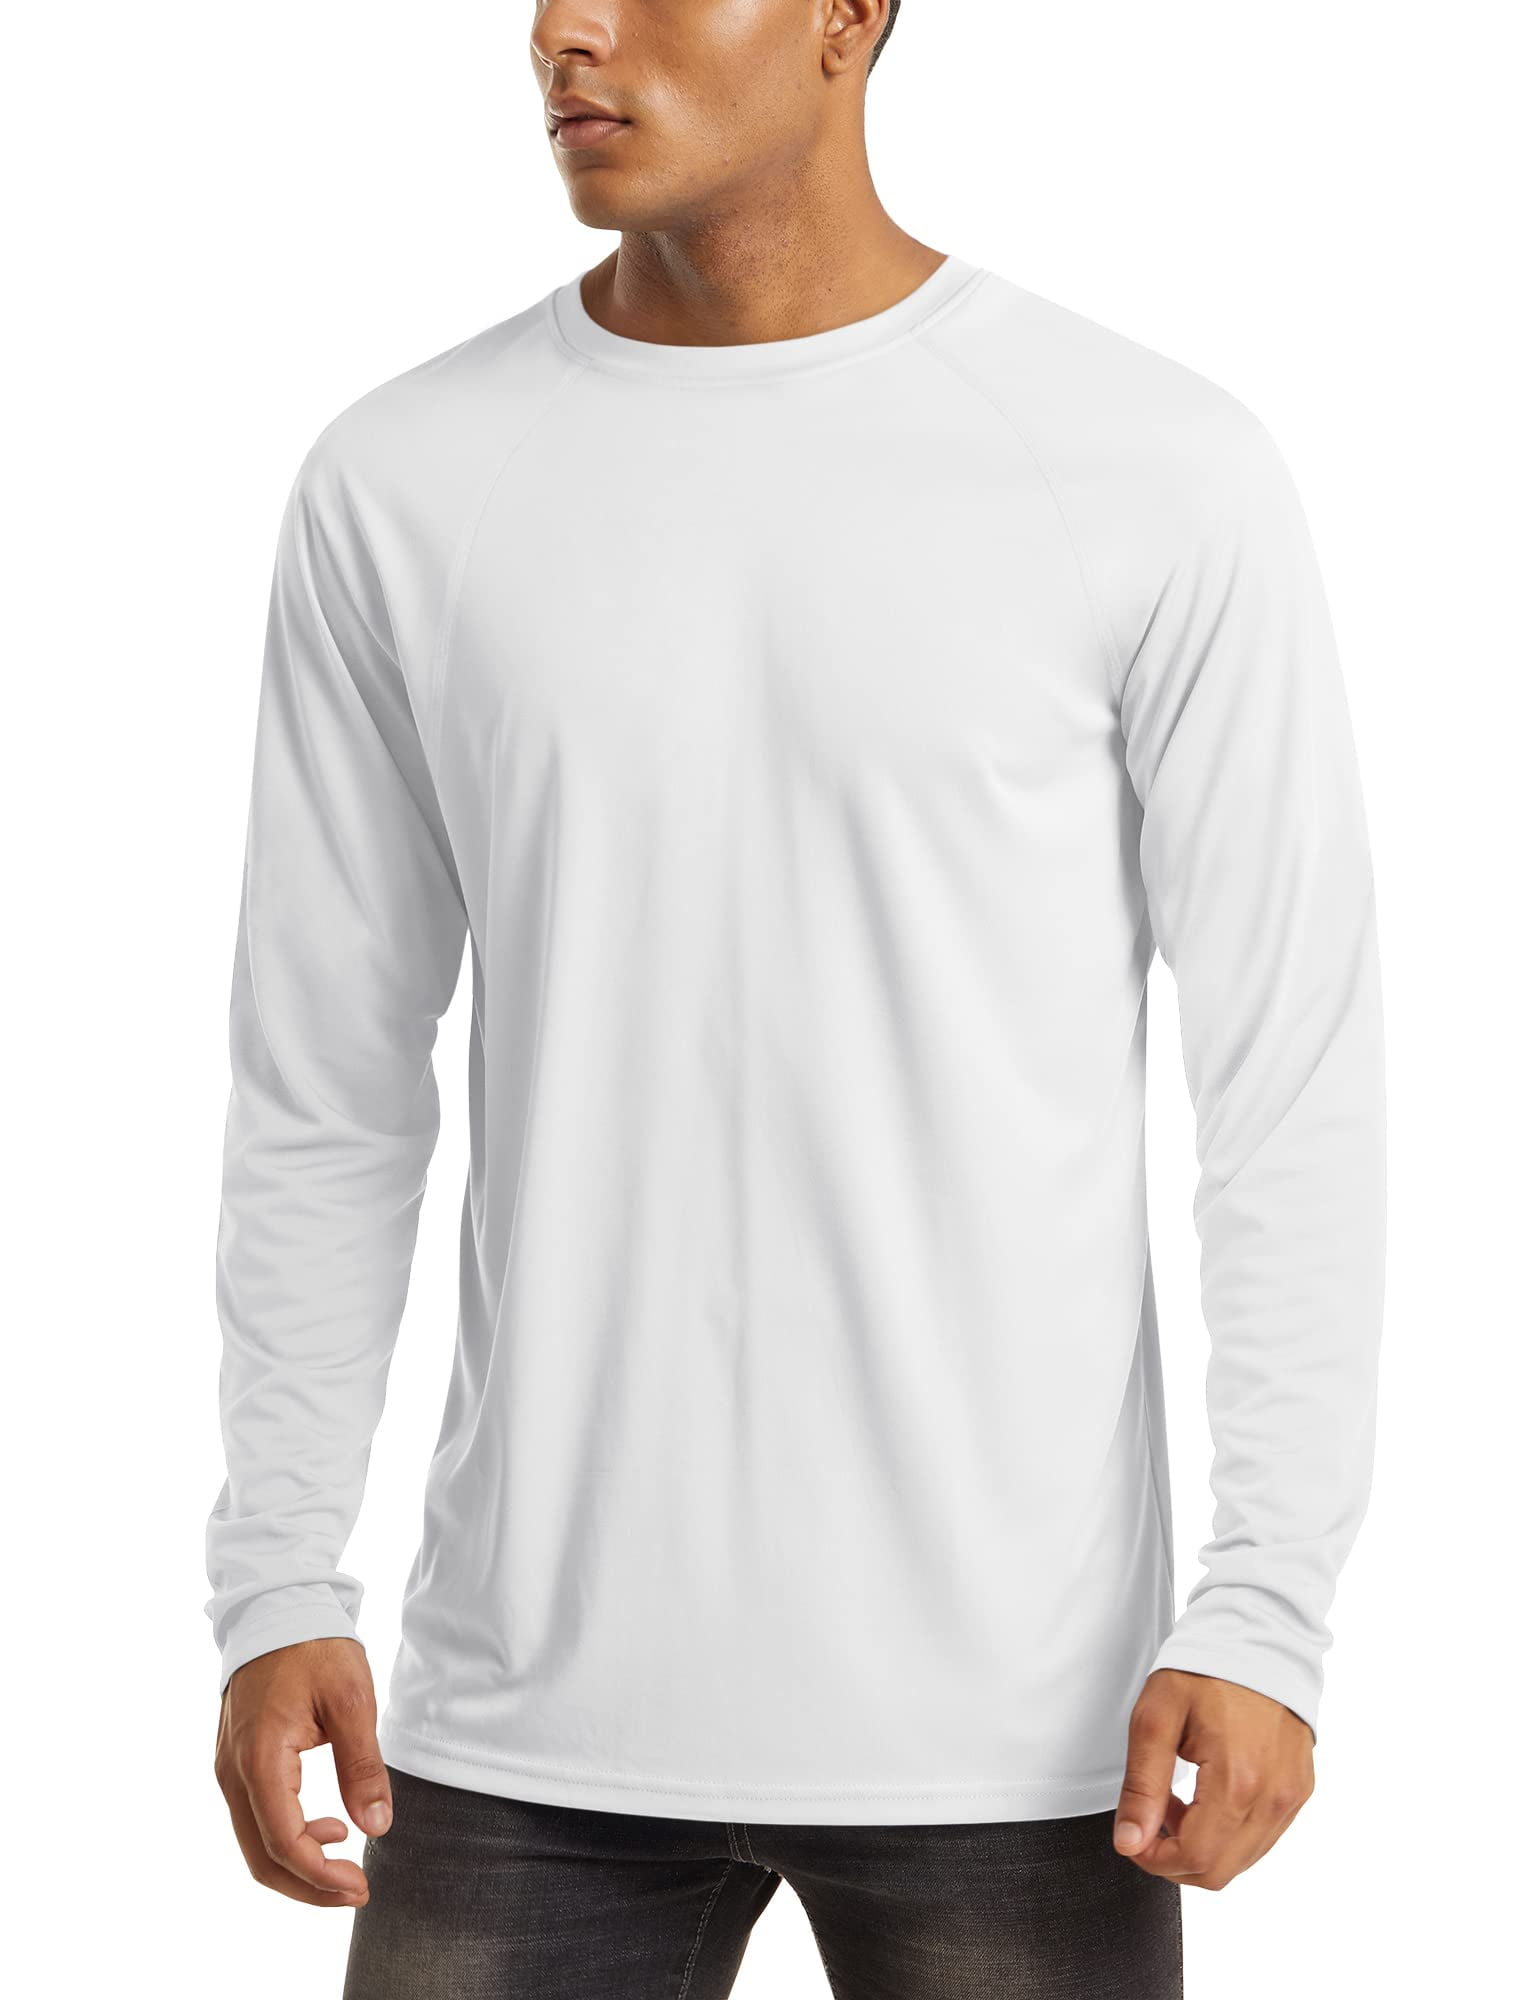 MAGCOMSEN UV Shirts for Men Quick Dry Shirts UPF 50 Long Sleeve Men  Athletic T-Shirt UV Protection Shirts for Men Guard Shirt for Men White